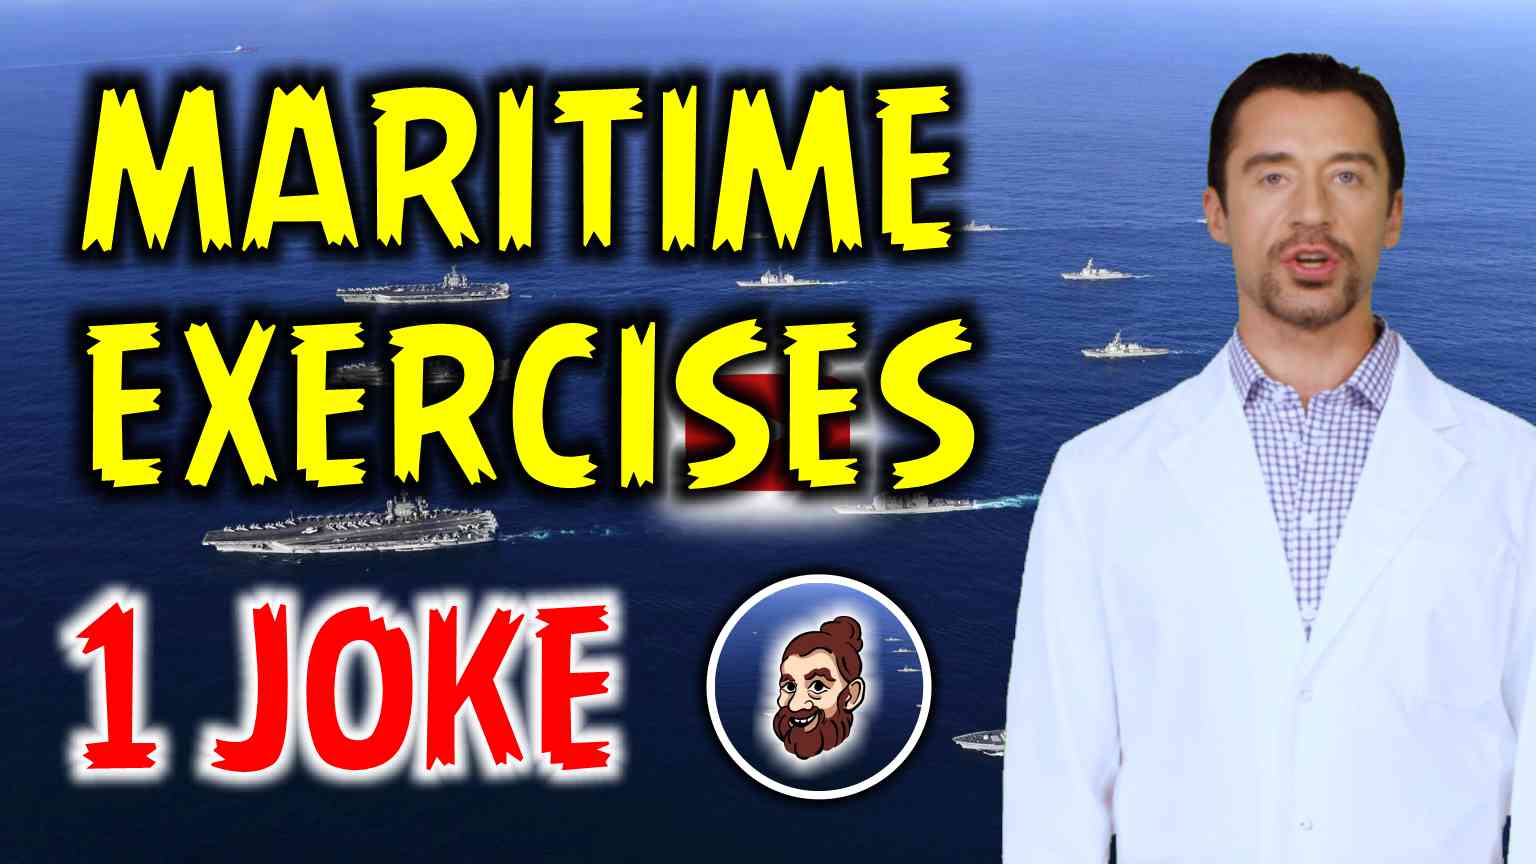 Maritime exercises